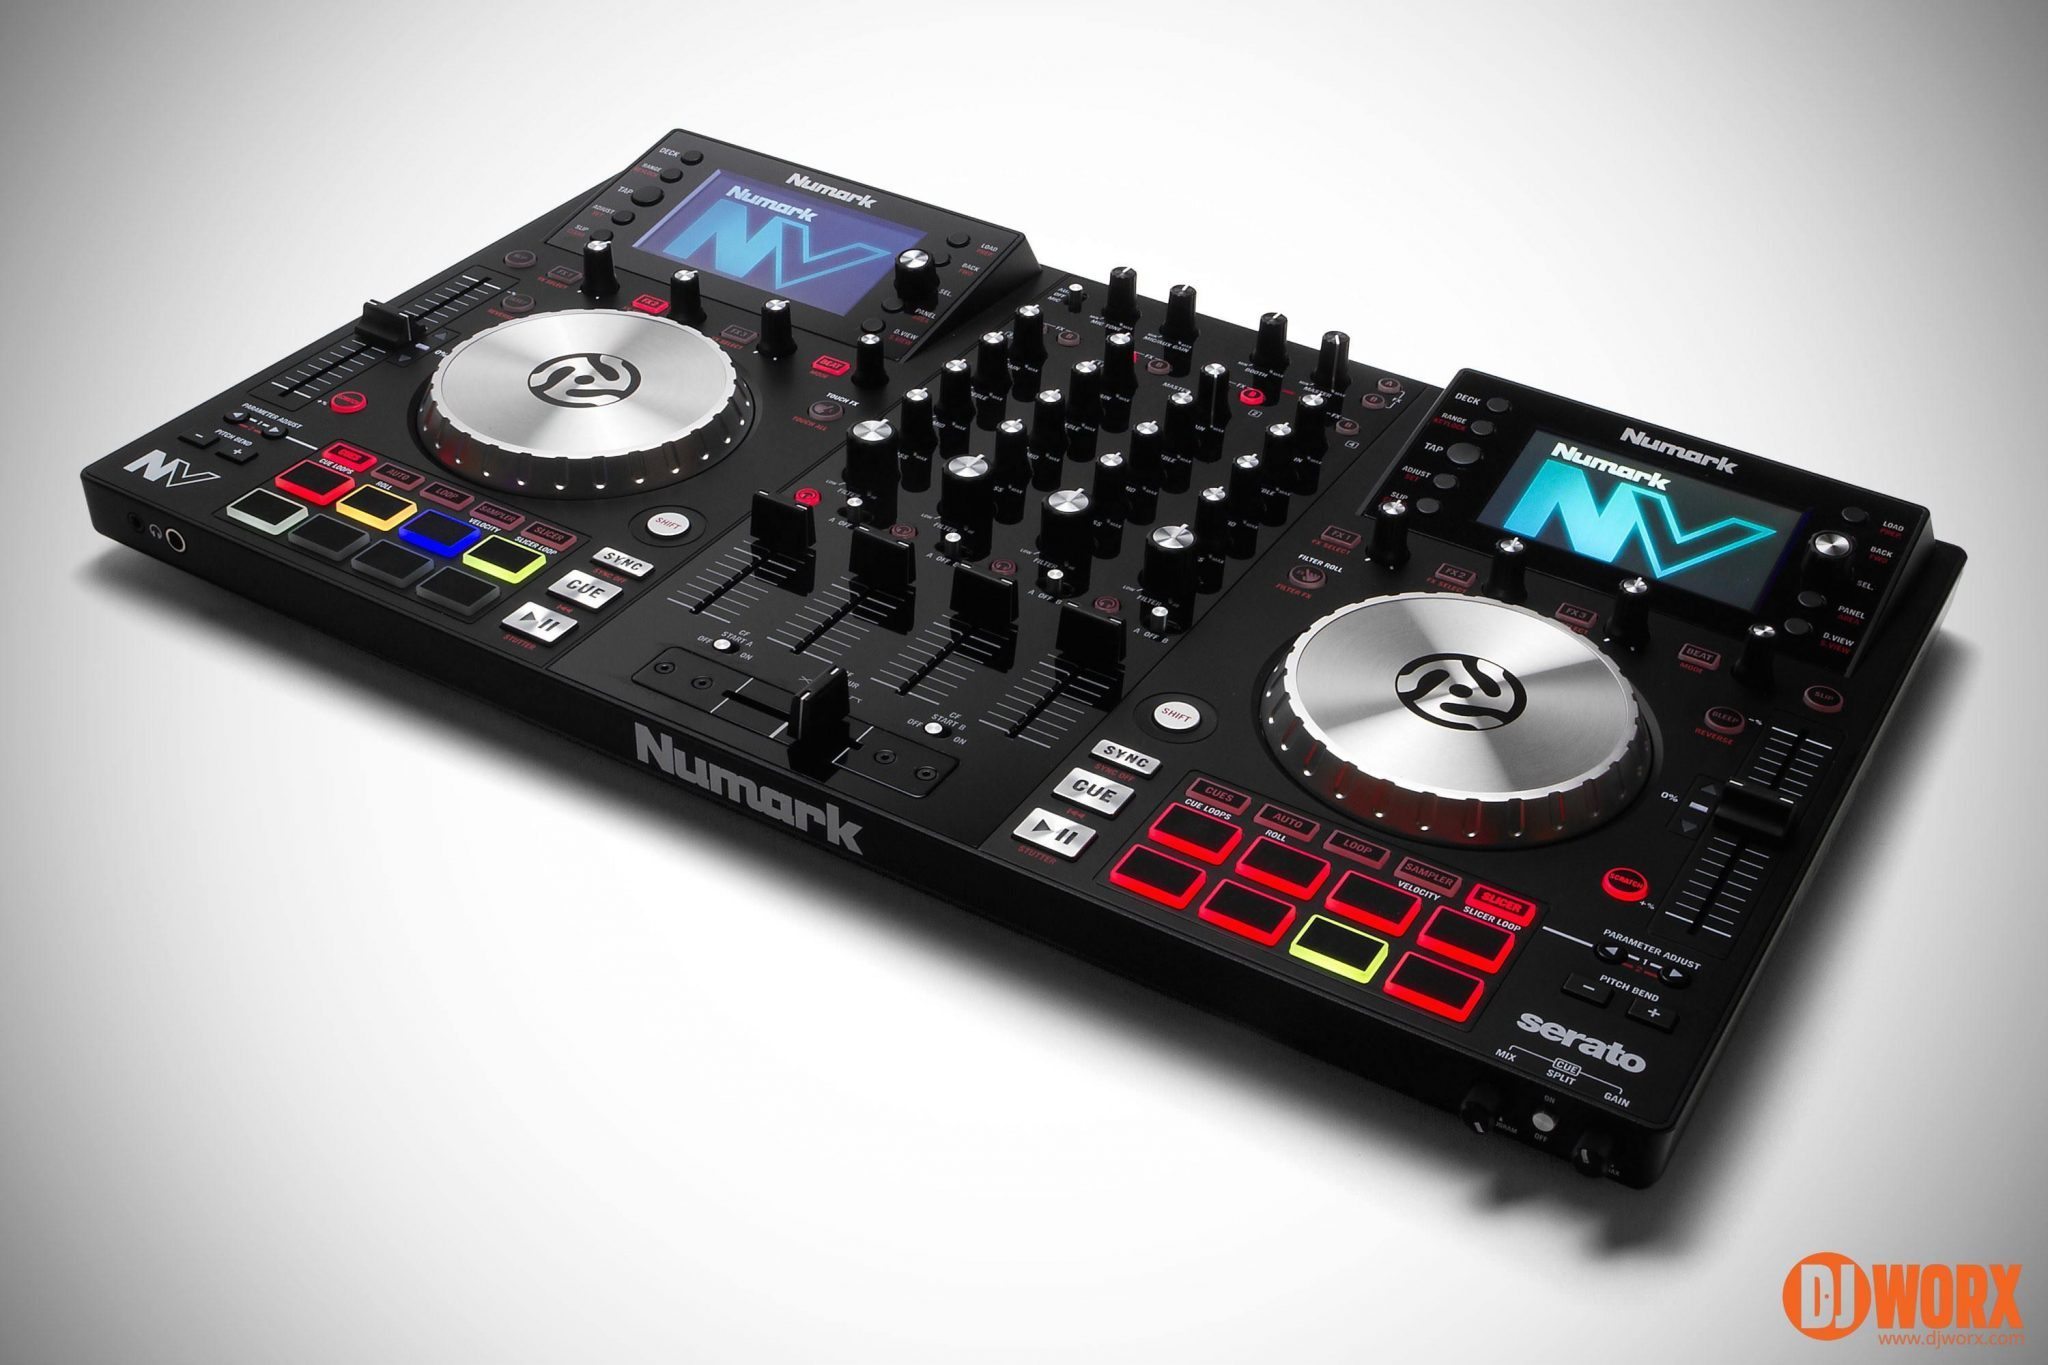 REVIEW: Numark NV Serato DJ Controller » DJWORX